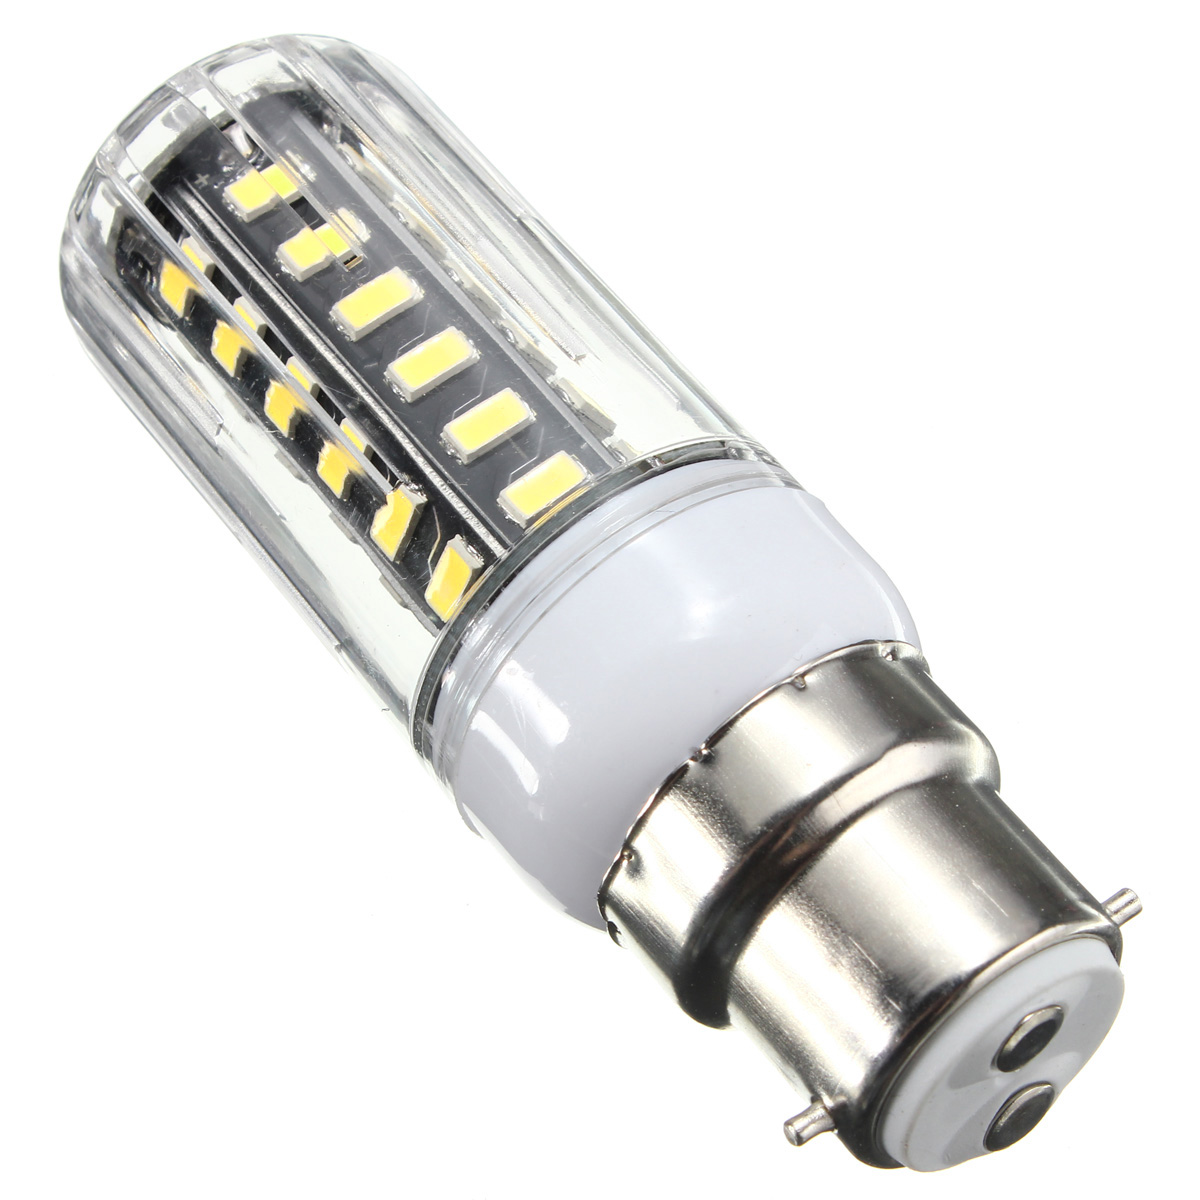 G9 E14 B22 GU10 E27 LED 5W 42 SMD 5733 LED White Warm White Cover Corn LED Bulb Light AC 220V